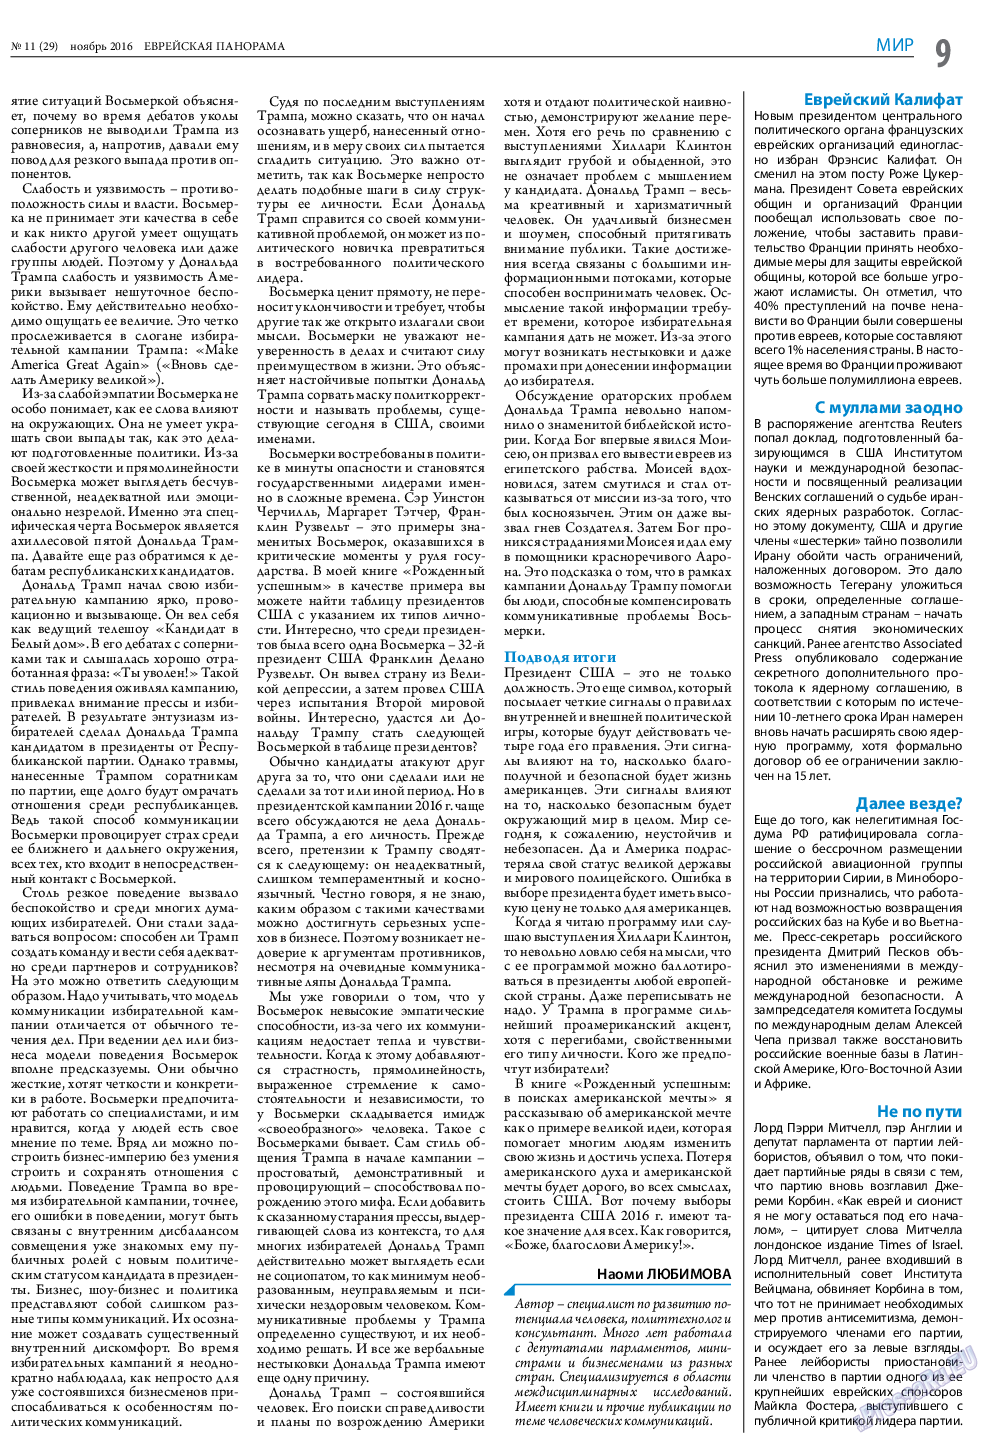 Еврейская панорама, газета. 2016 №11 стр.9